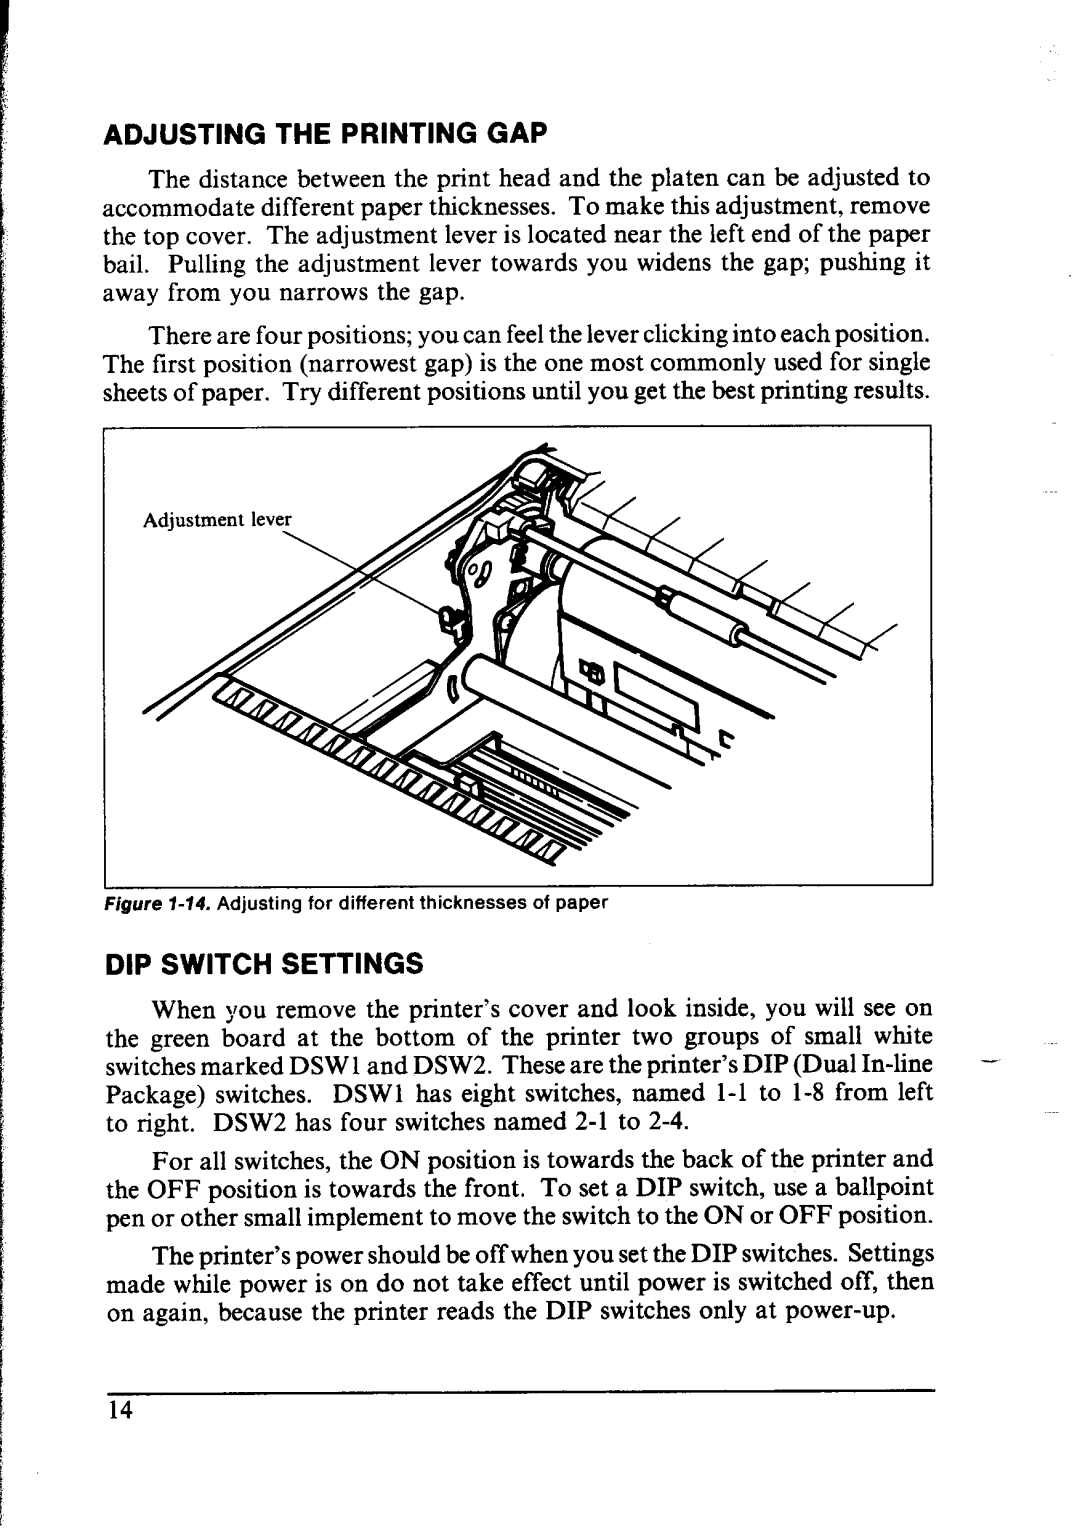 Star Micronics NX-1000 manual Adjusting The Printing Gap, Dip Switch Settings 